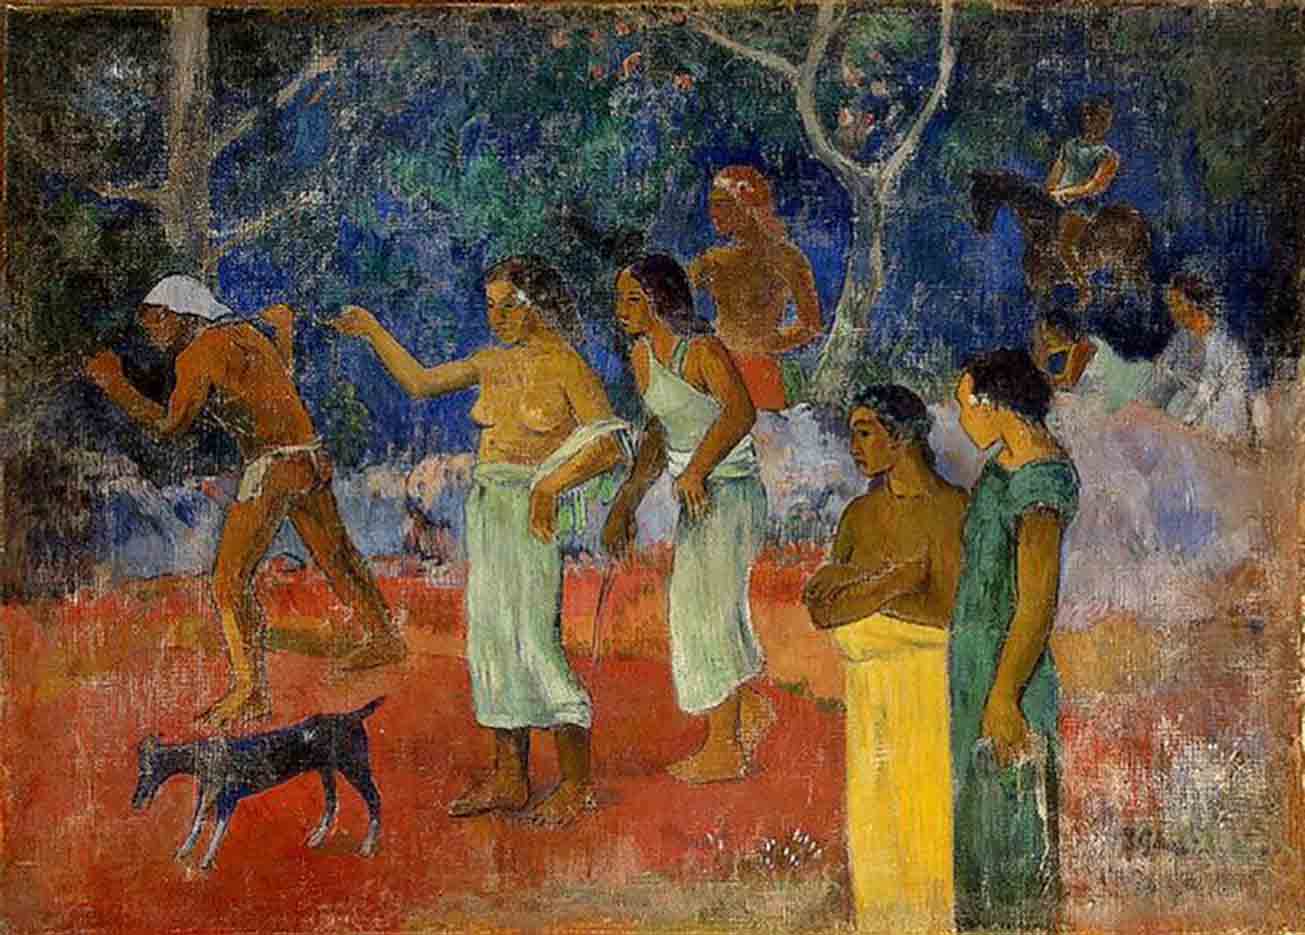 Поль Гоген (Paul Gauguin) “Scene from Tahitian Life“